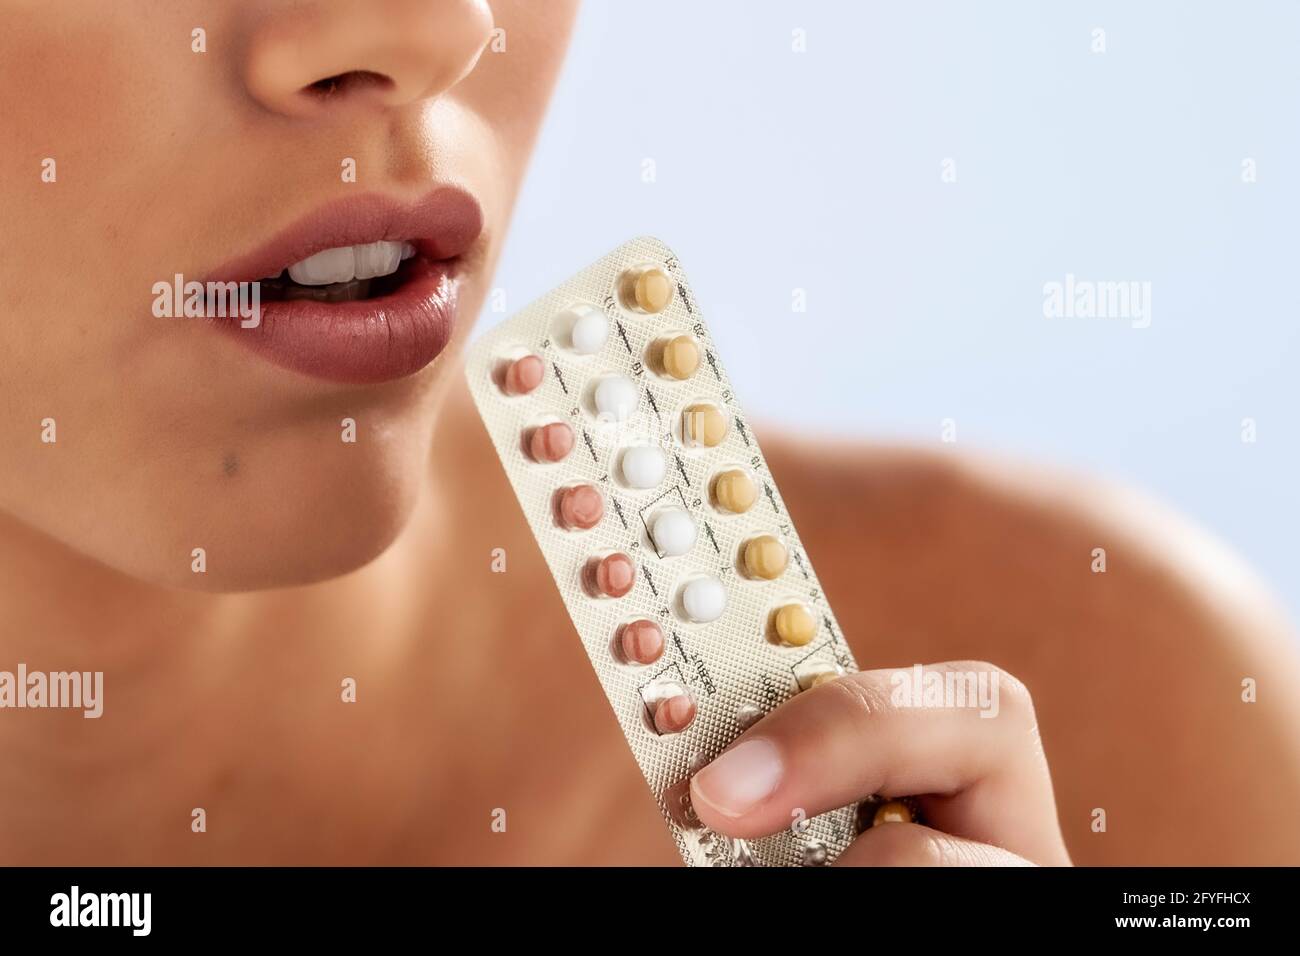 Oral contraception pills. Stock Photo